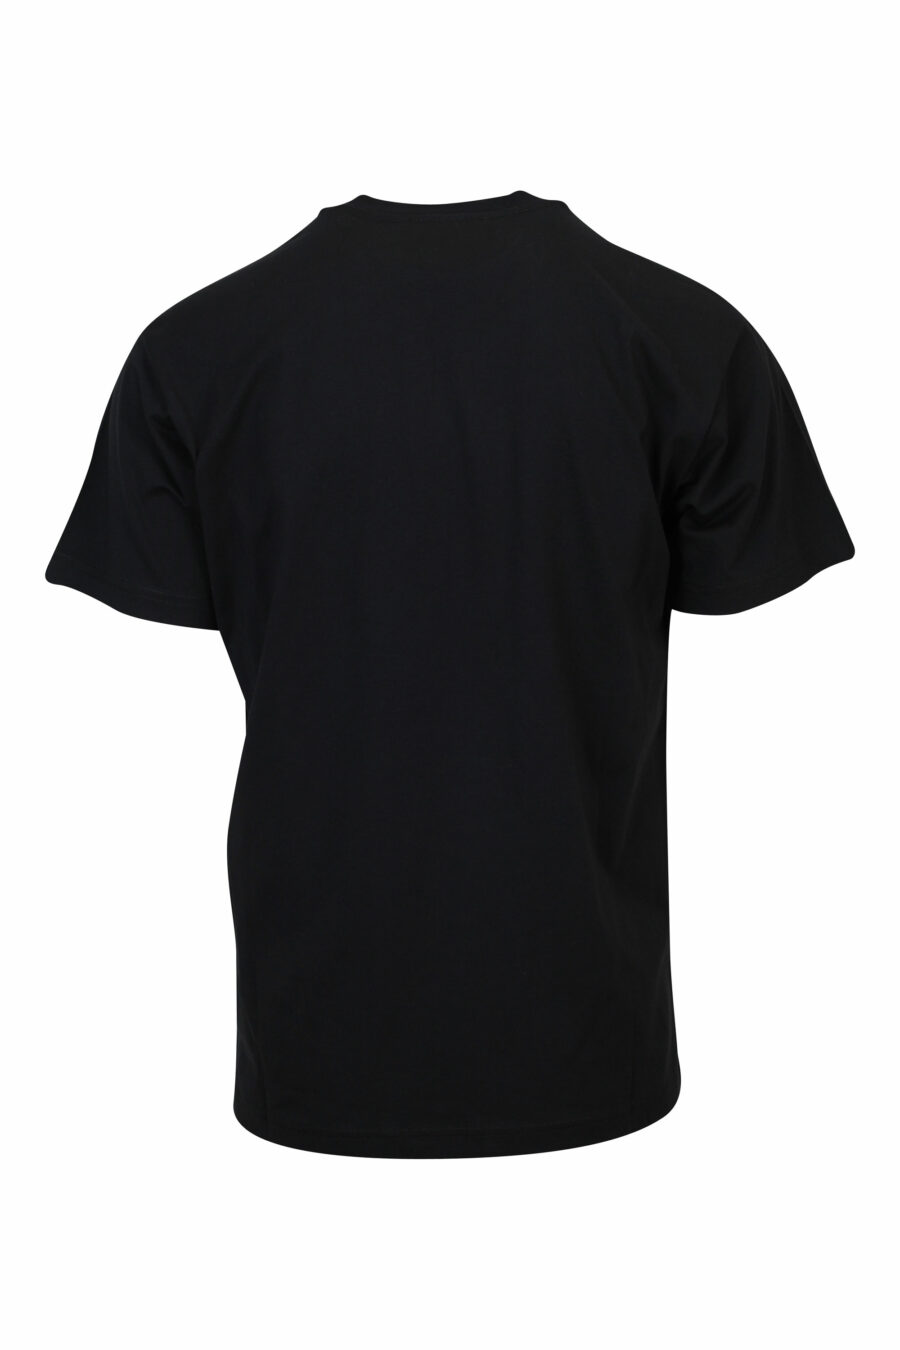 Camiseta negra con maxilogo moto "couture" - 8052019603422 1